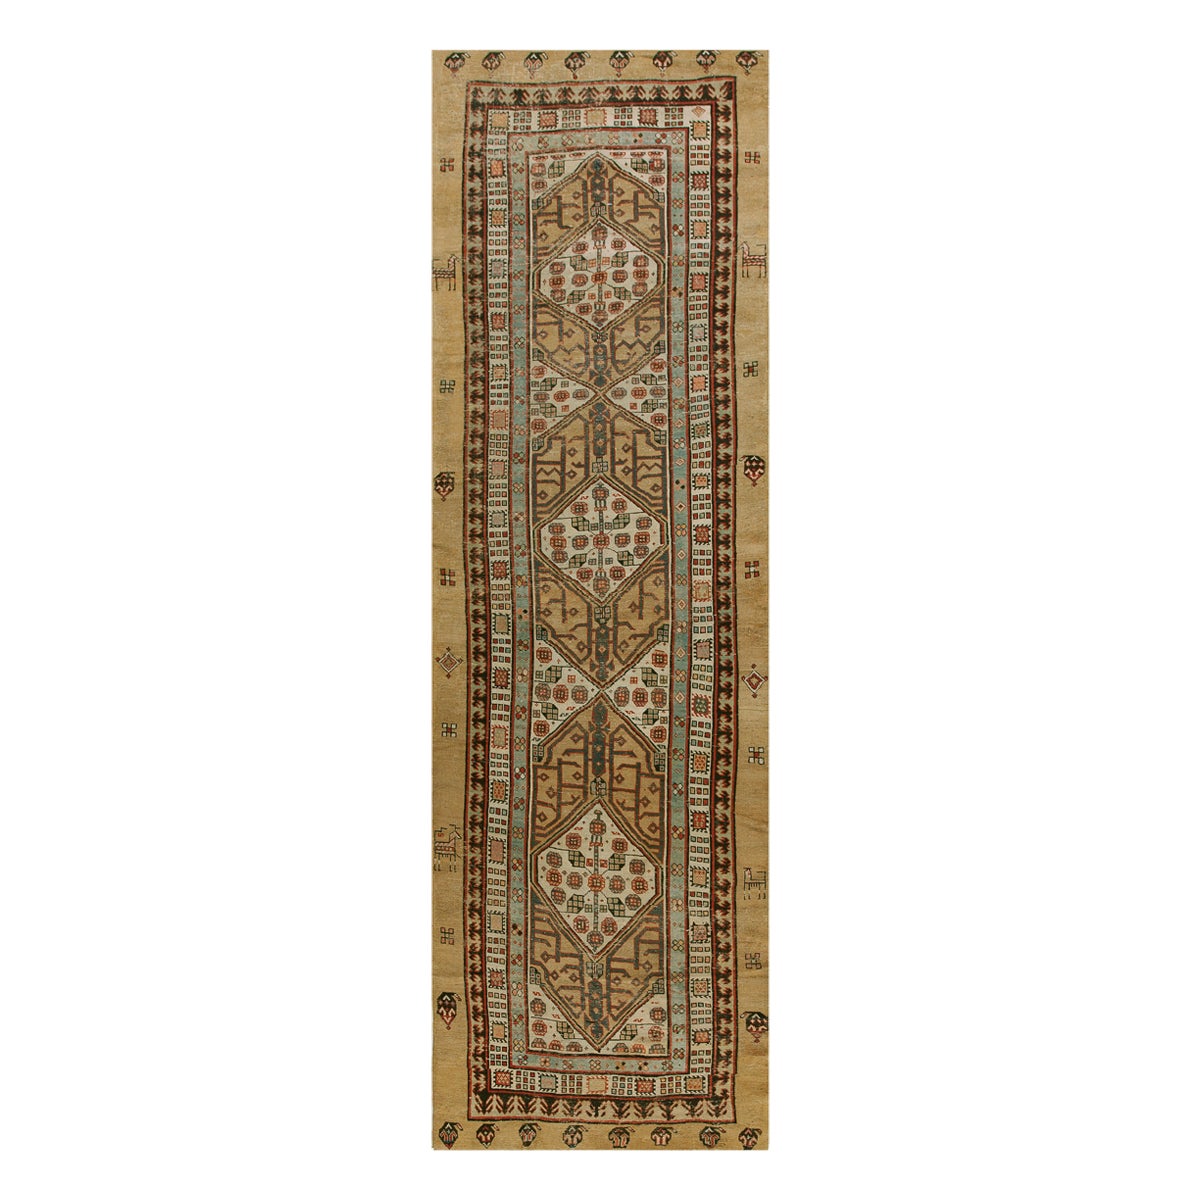 Late 19th Century Persian Serab Runner Carpet ( 3'8" x 12'3" - 112 x 373 )